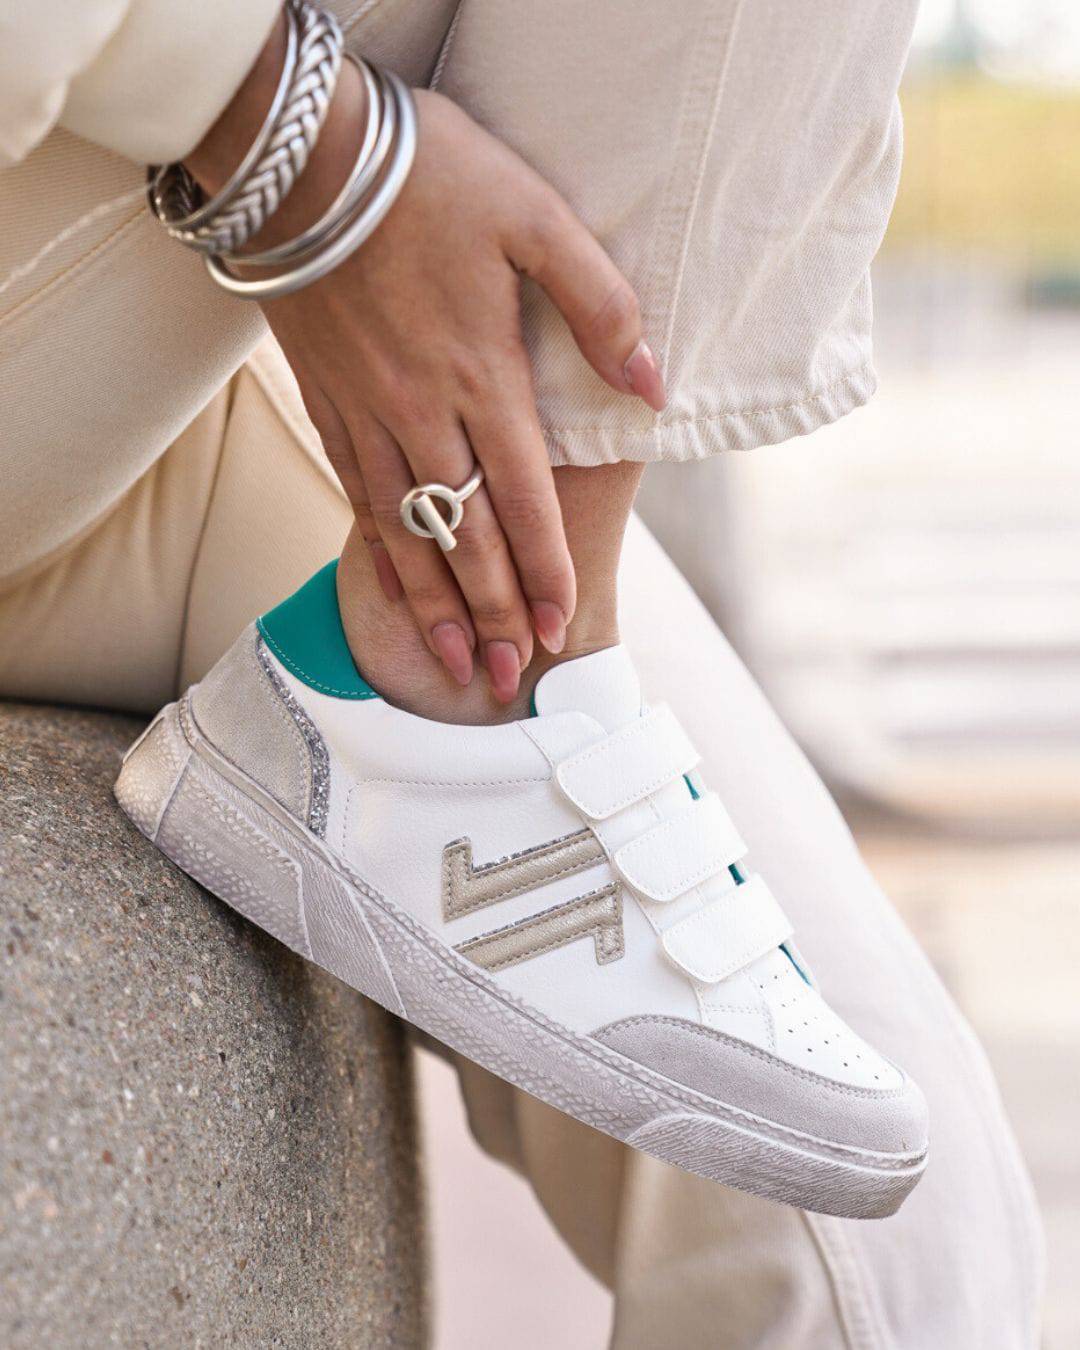 Damen-Sneaker in Weiß mit Klettverschluss - CL69 GREEN - Casualmode.de